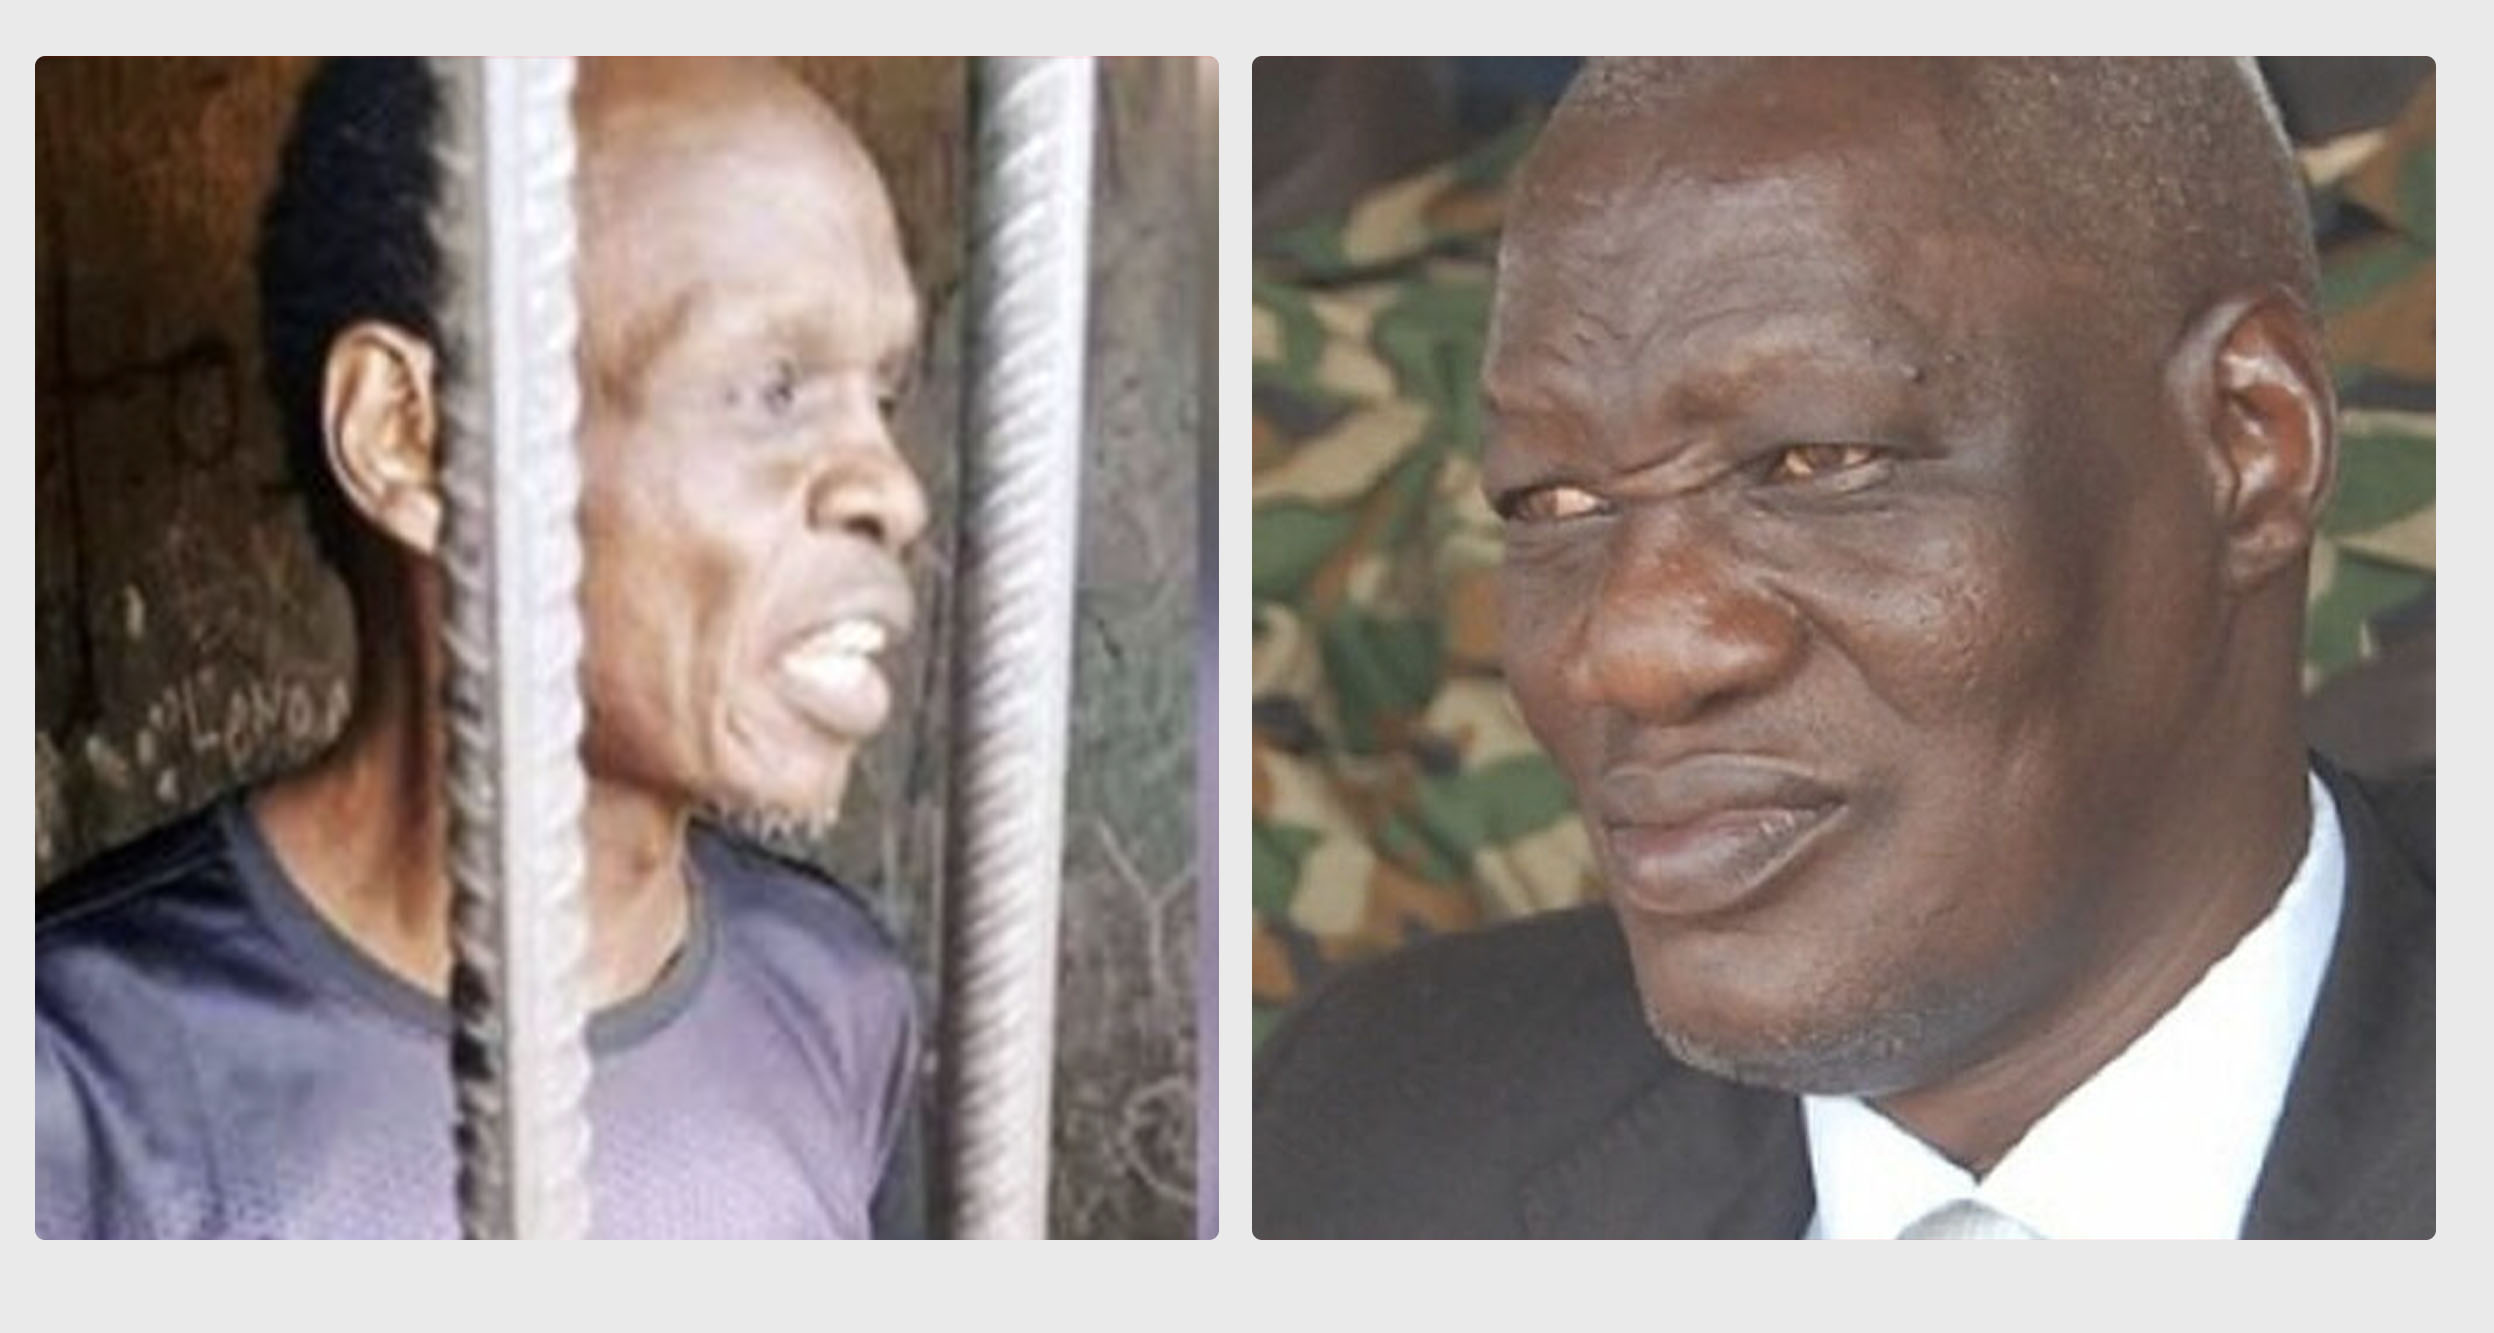 Yakani urges Kiir to pardon Abraham Chol, Kuel Aguer